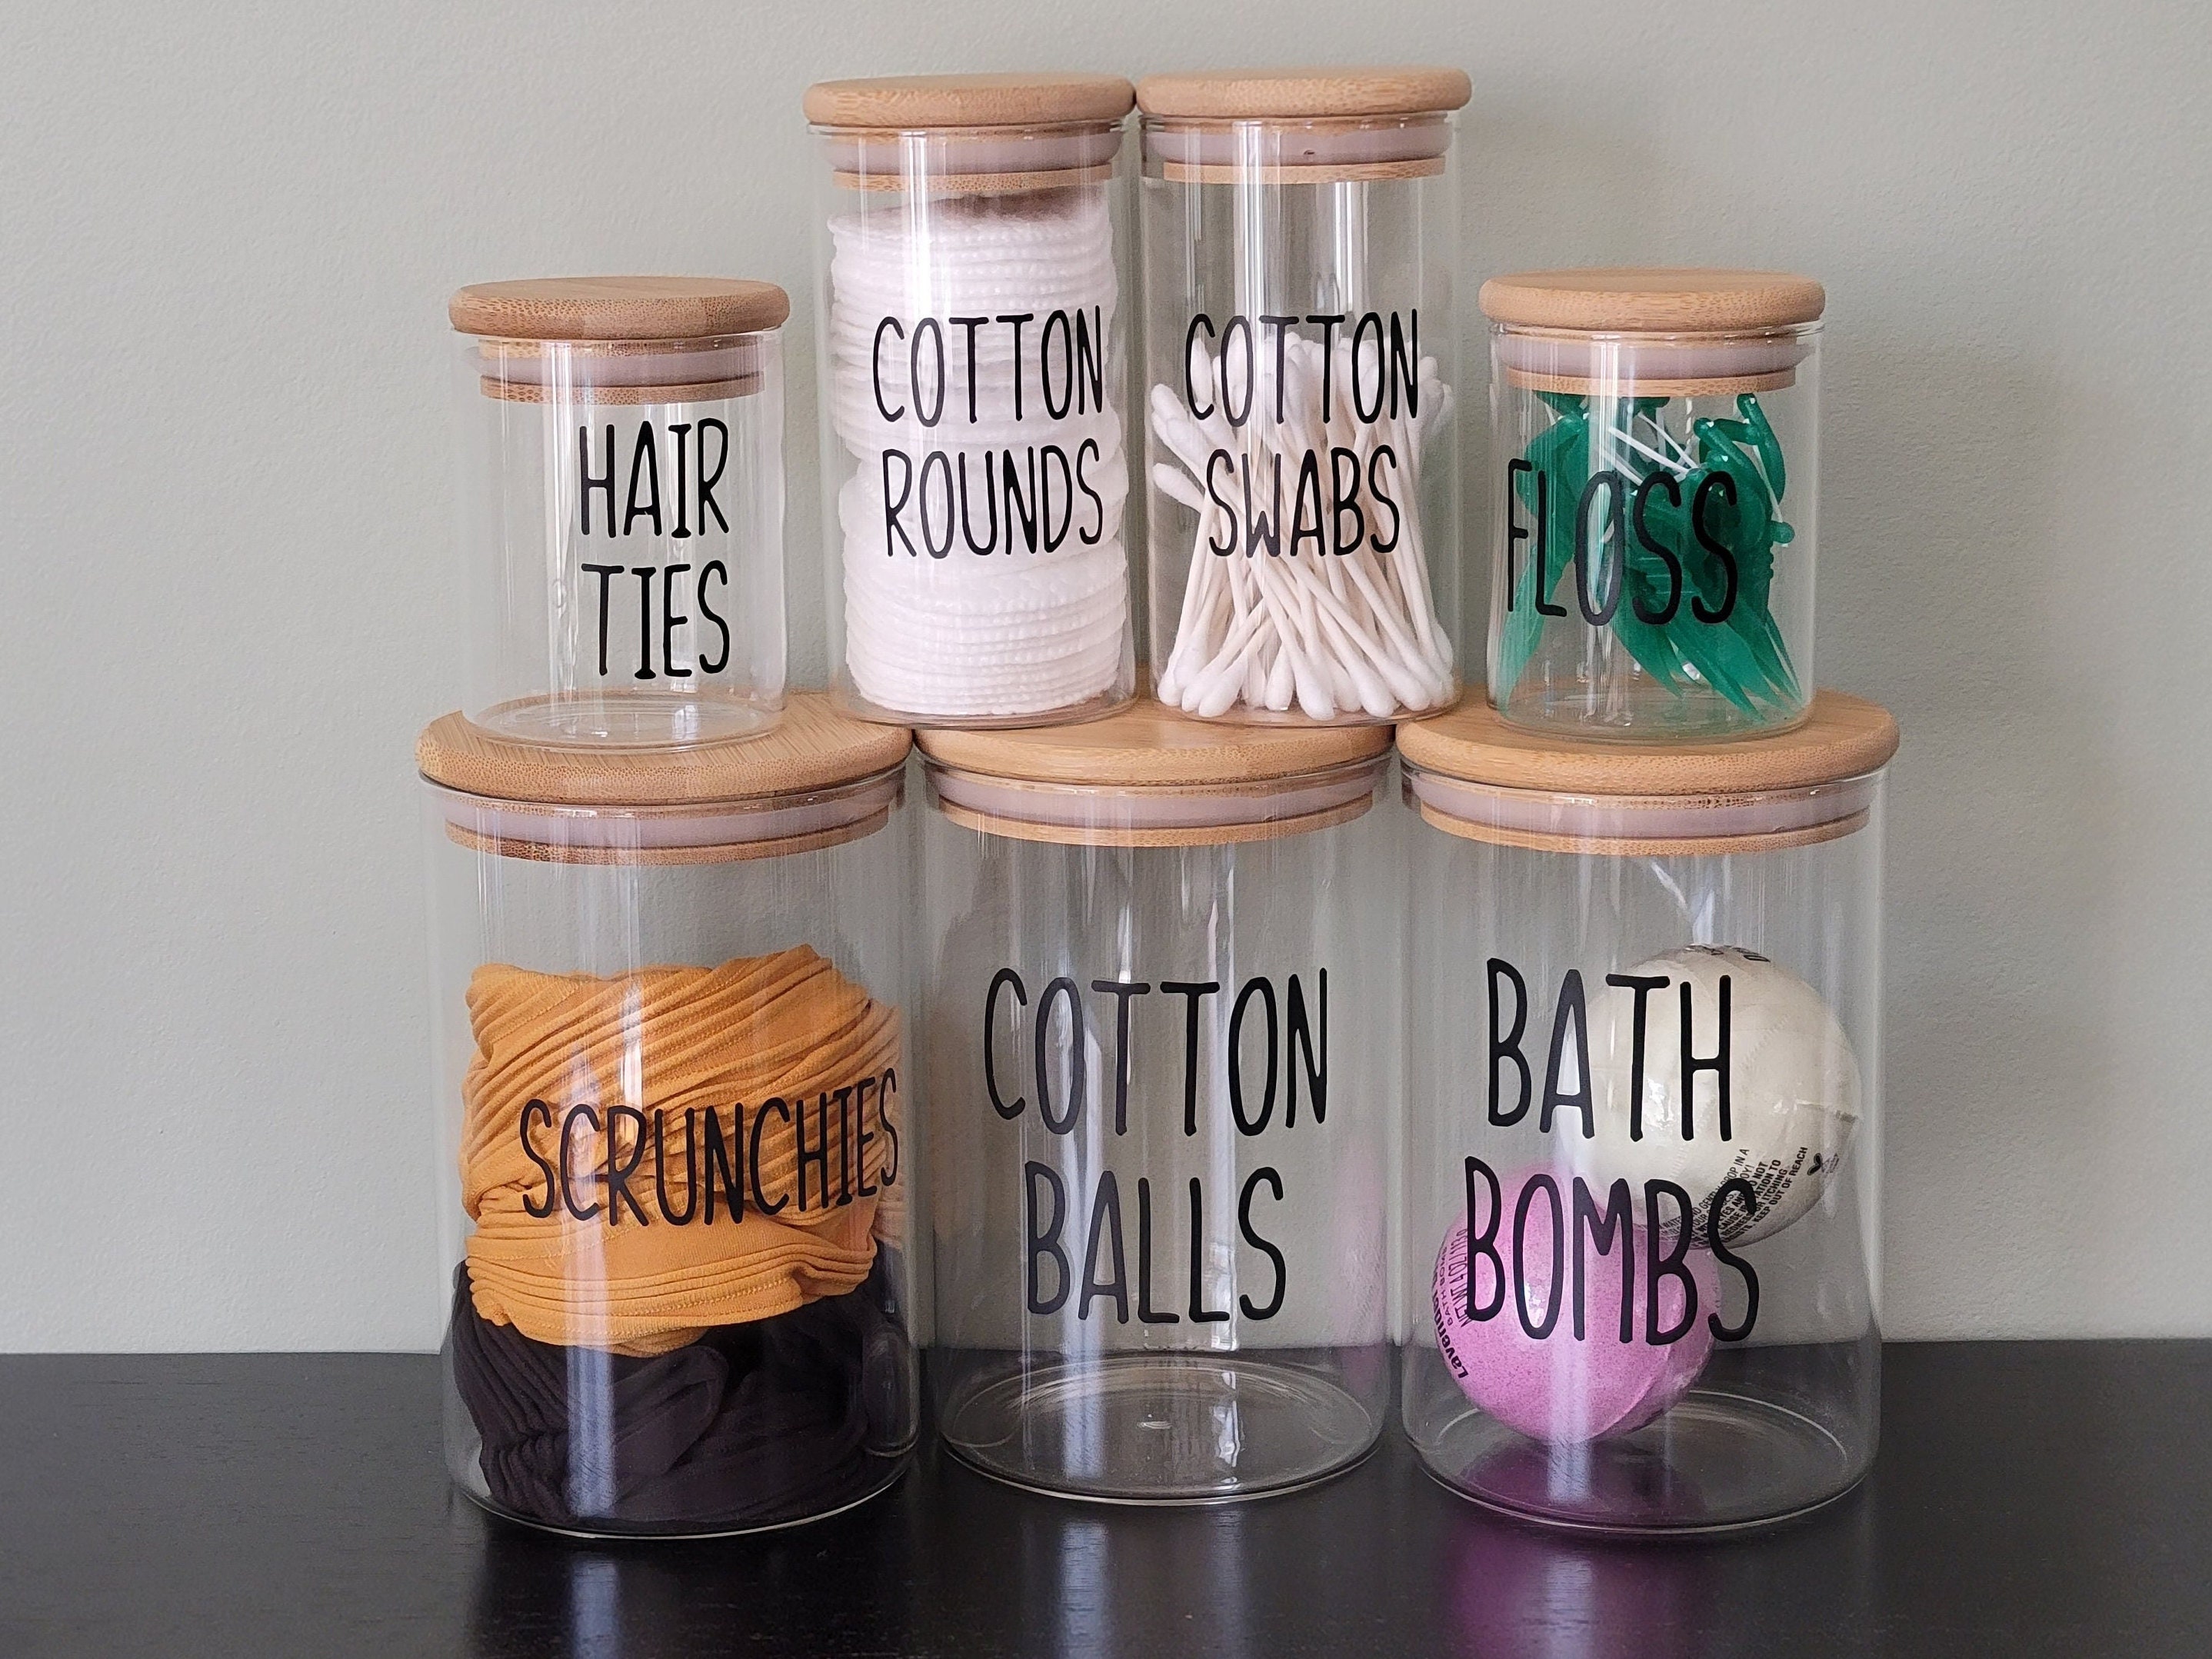 Classic Glass Storage Jars With Lids Kitchen Decor Bathroom Decor Bath and  Body Products 12oz 